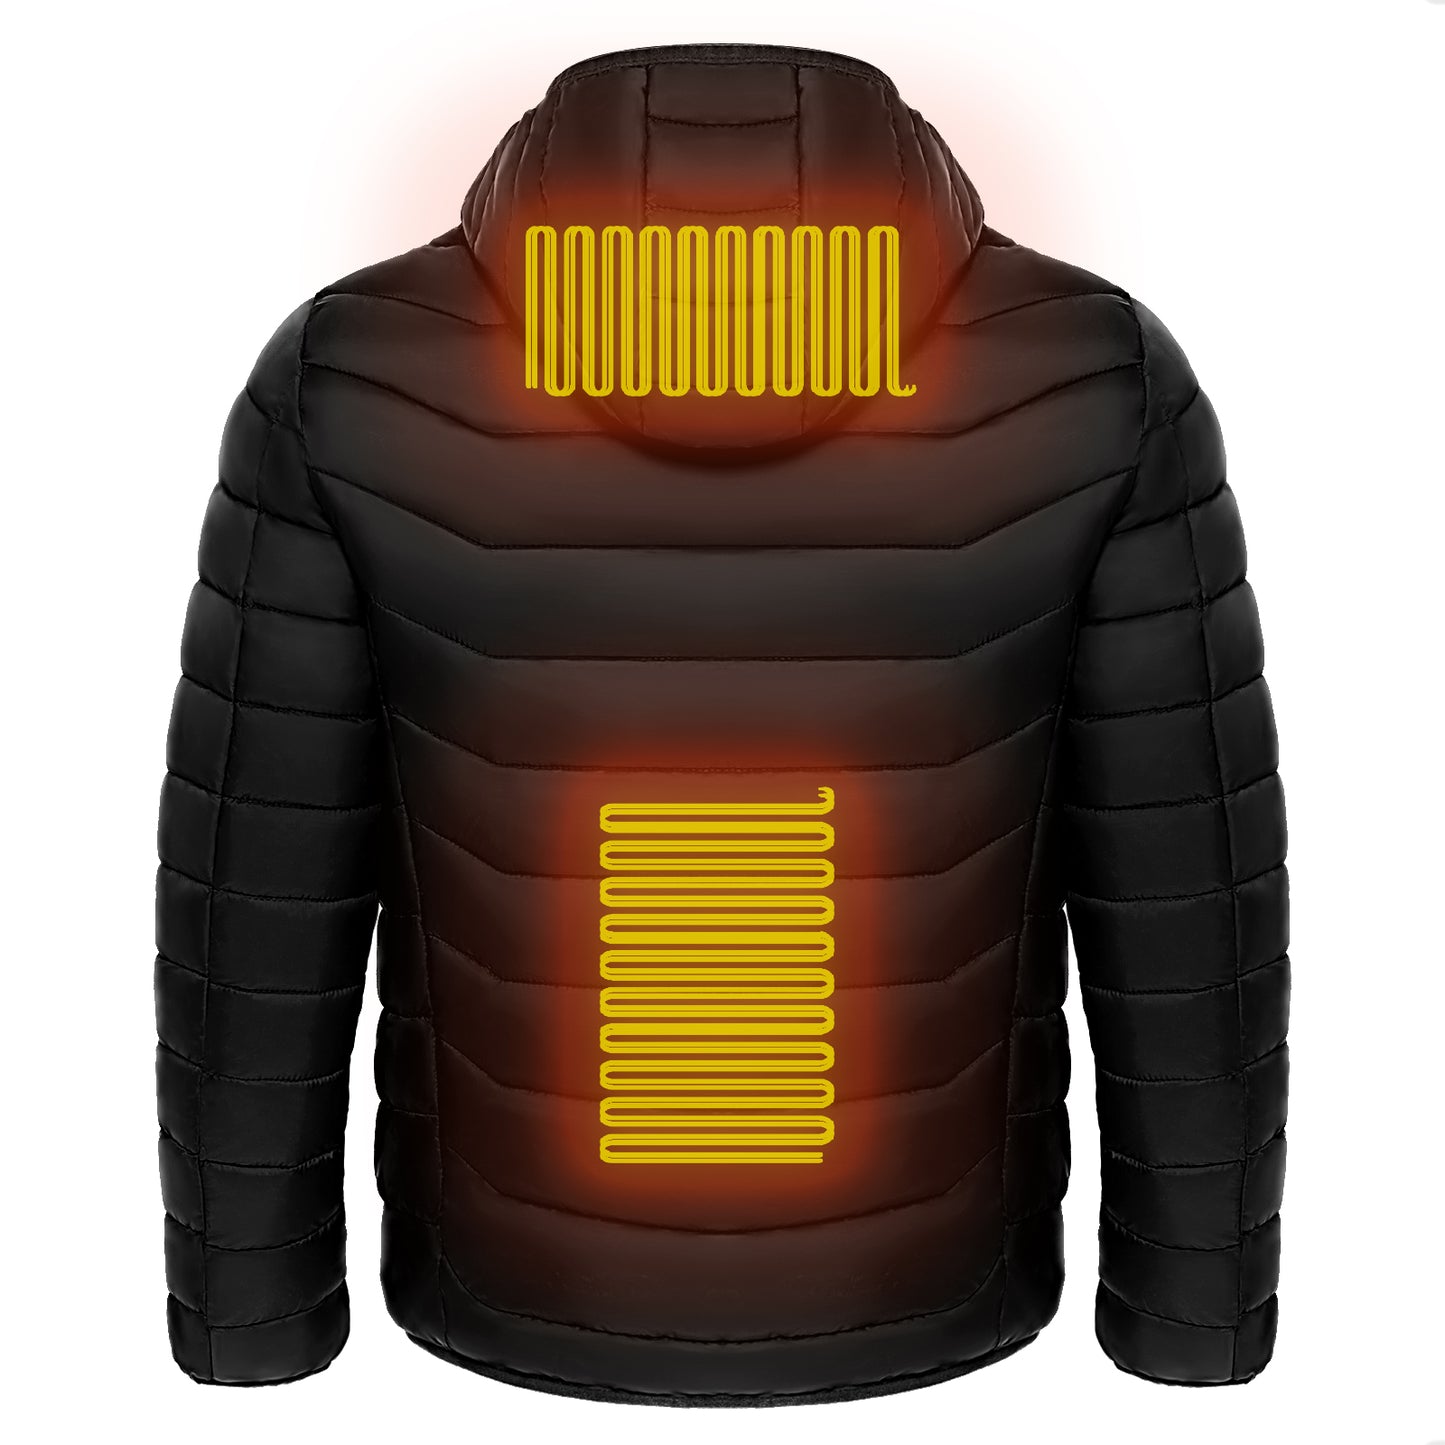 Men Heated Puffer Jacket Electric Heating Insulated Hood Windbreaker 9Heat Zones